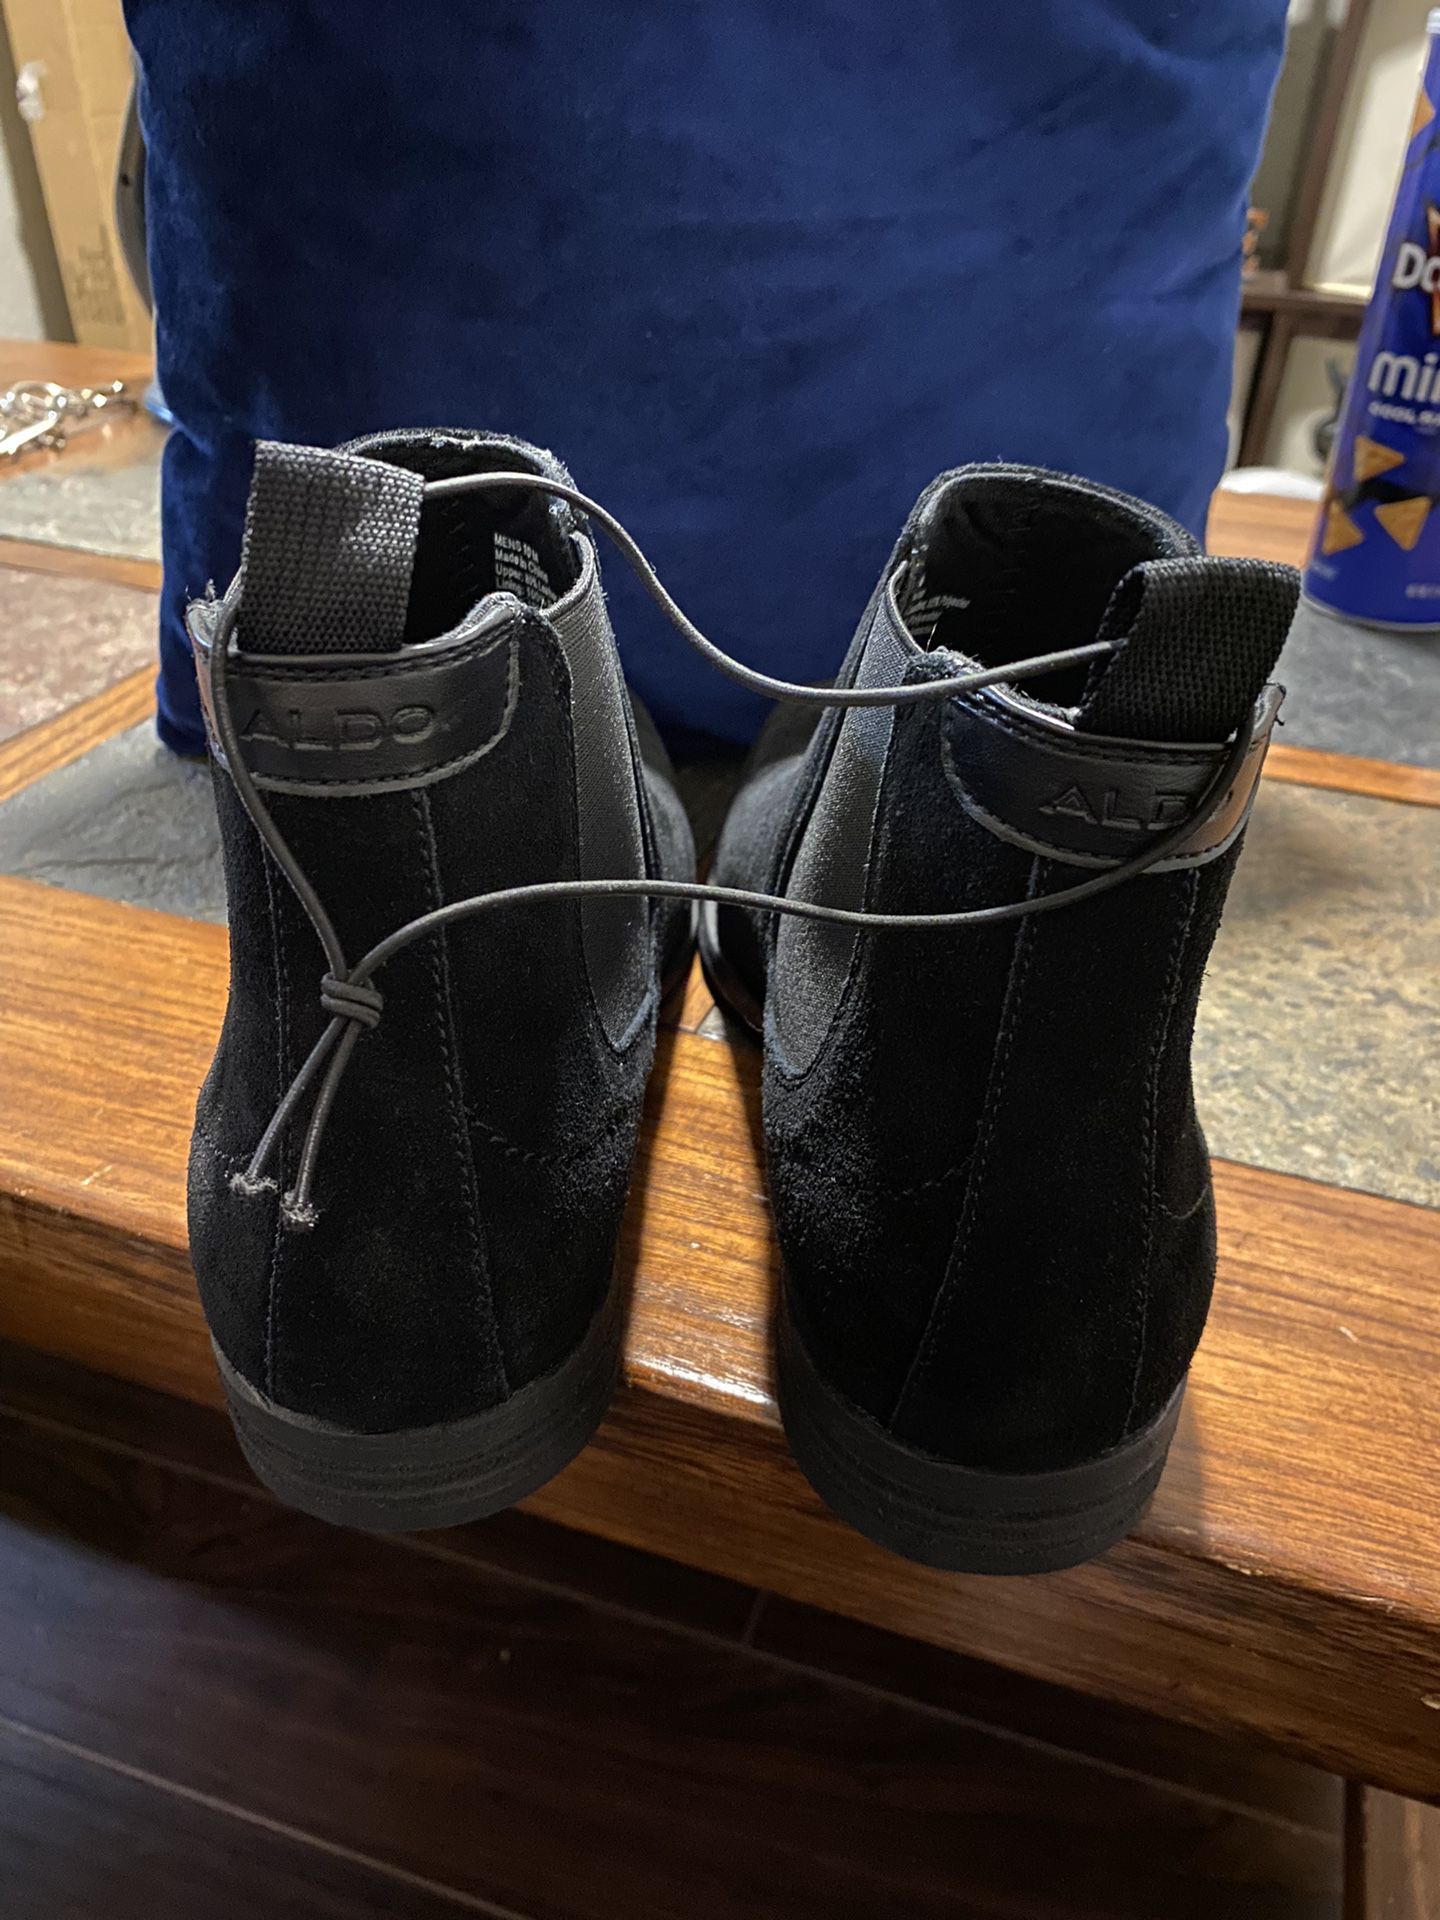 New Mens size 10 Aldo boots, genuine suede